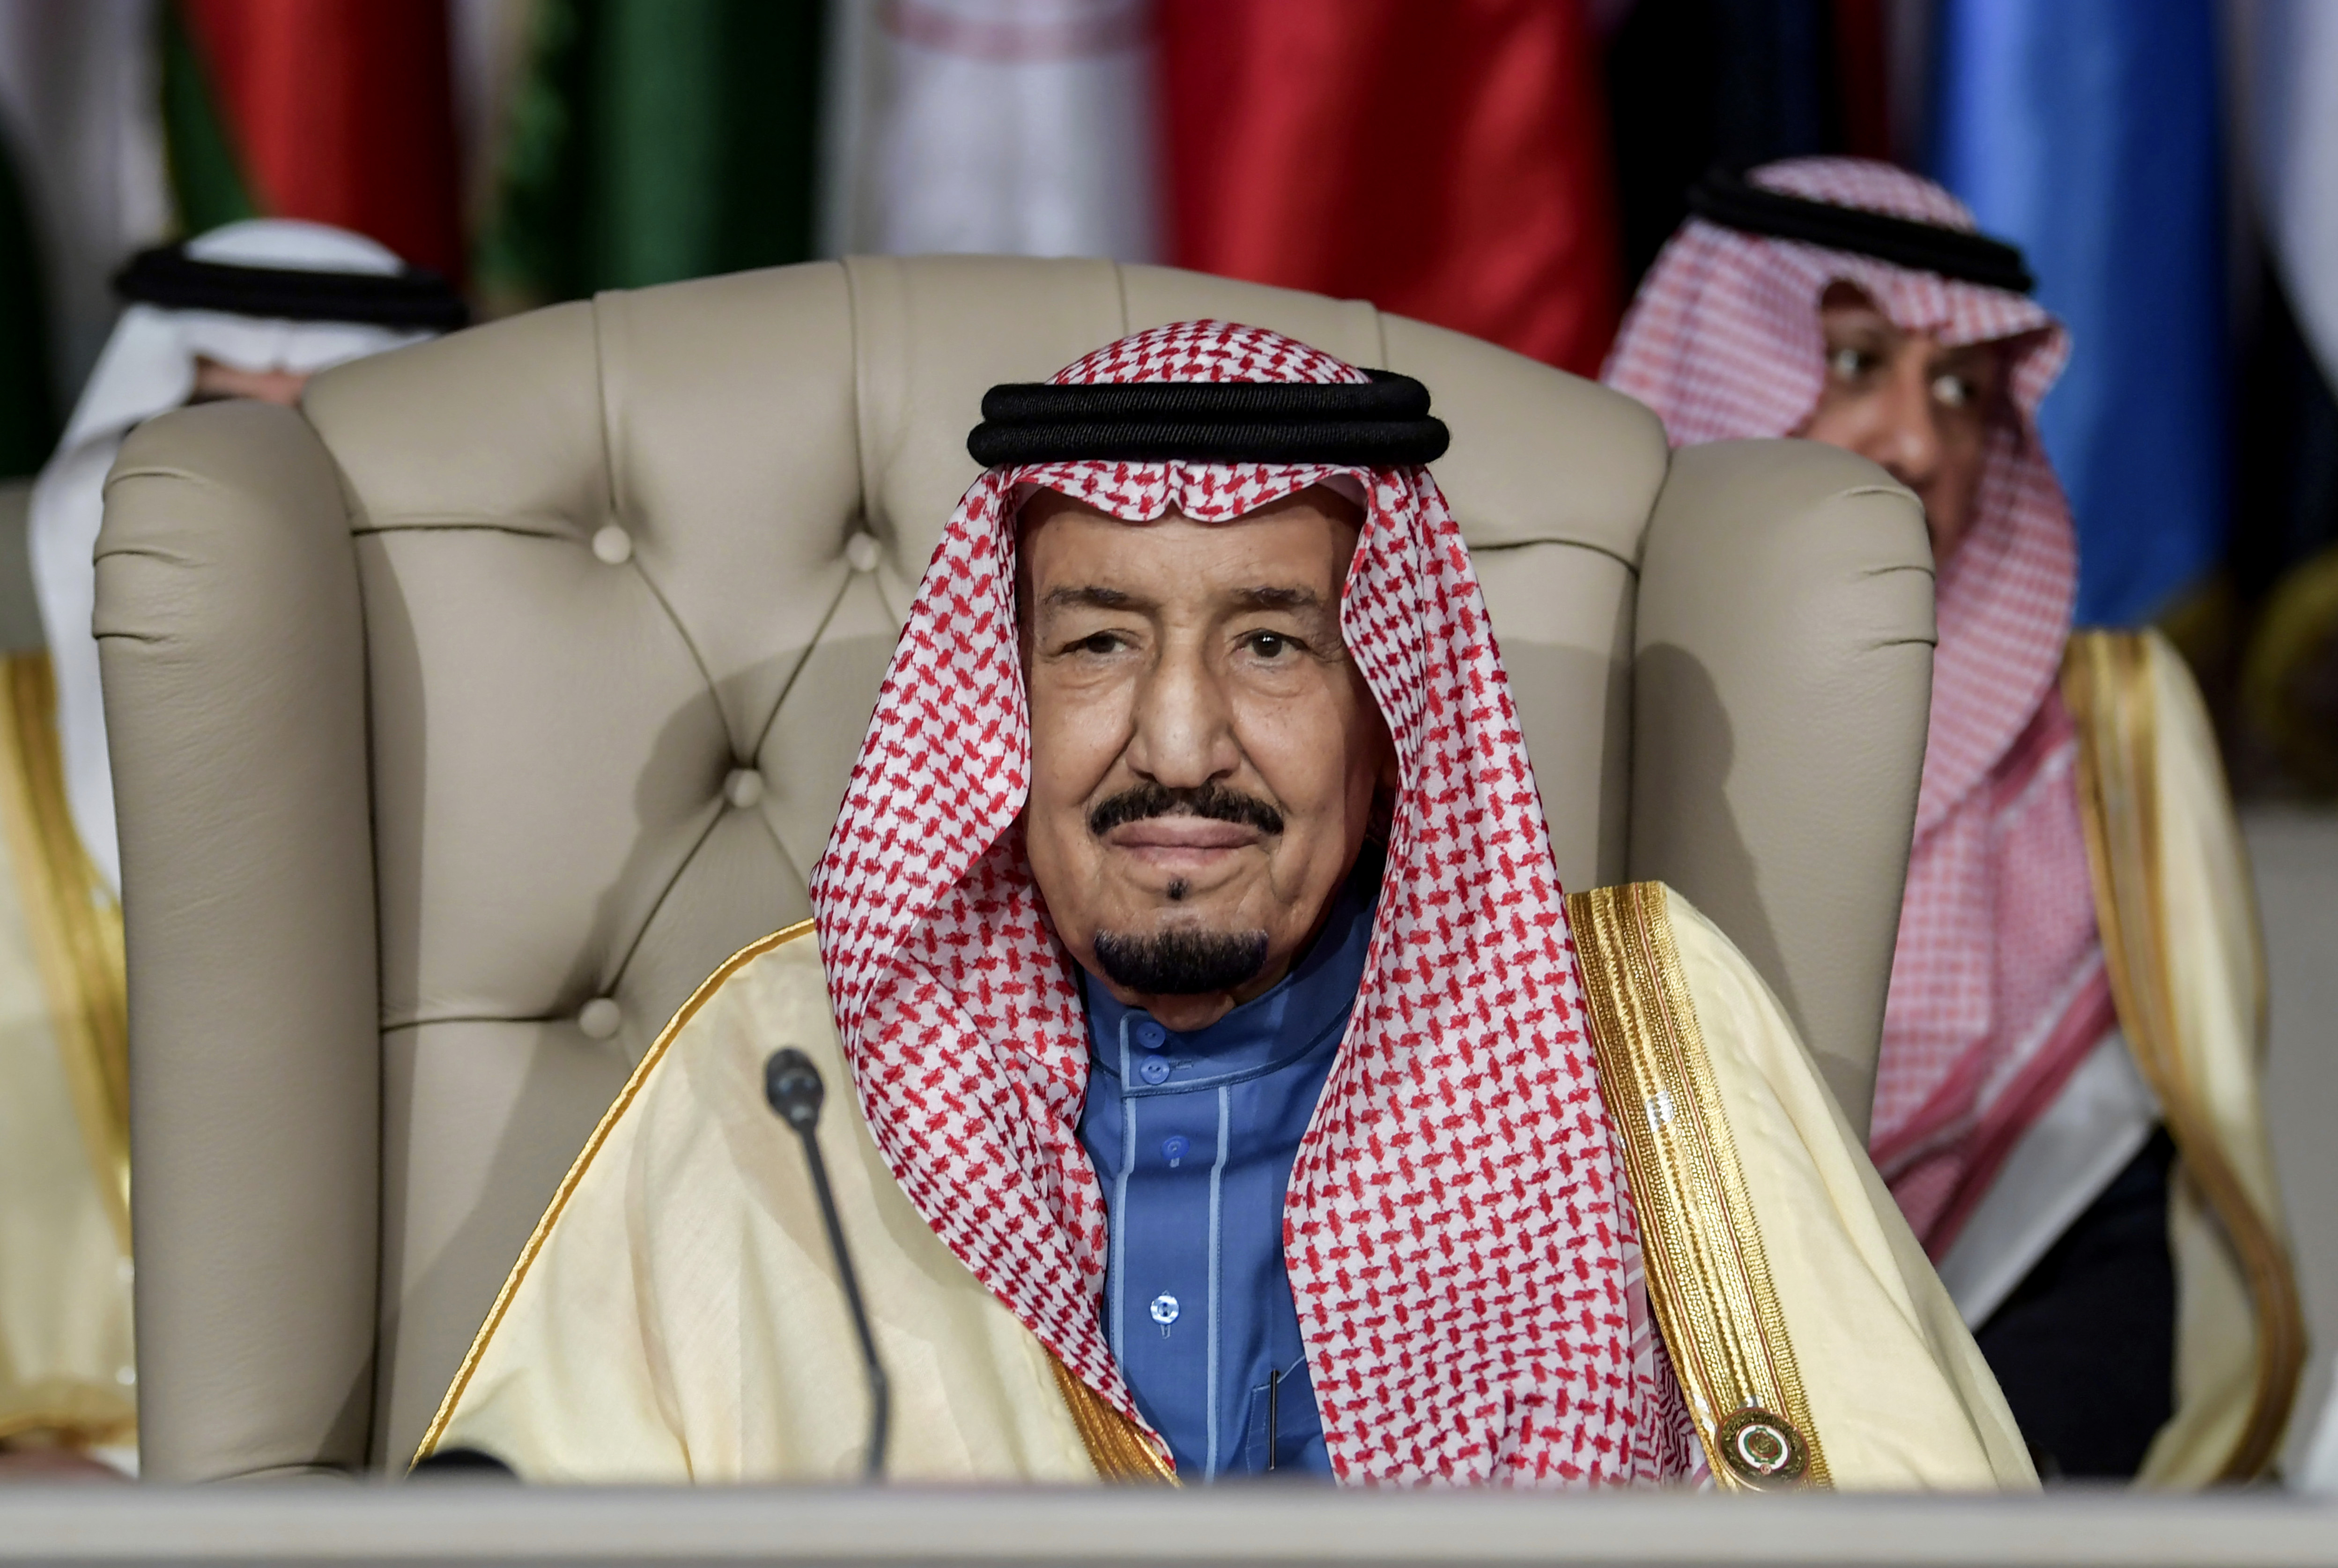 Saudi Arabia's King Salman ratified by royal decree Tuesday's mass execution